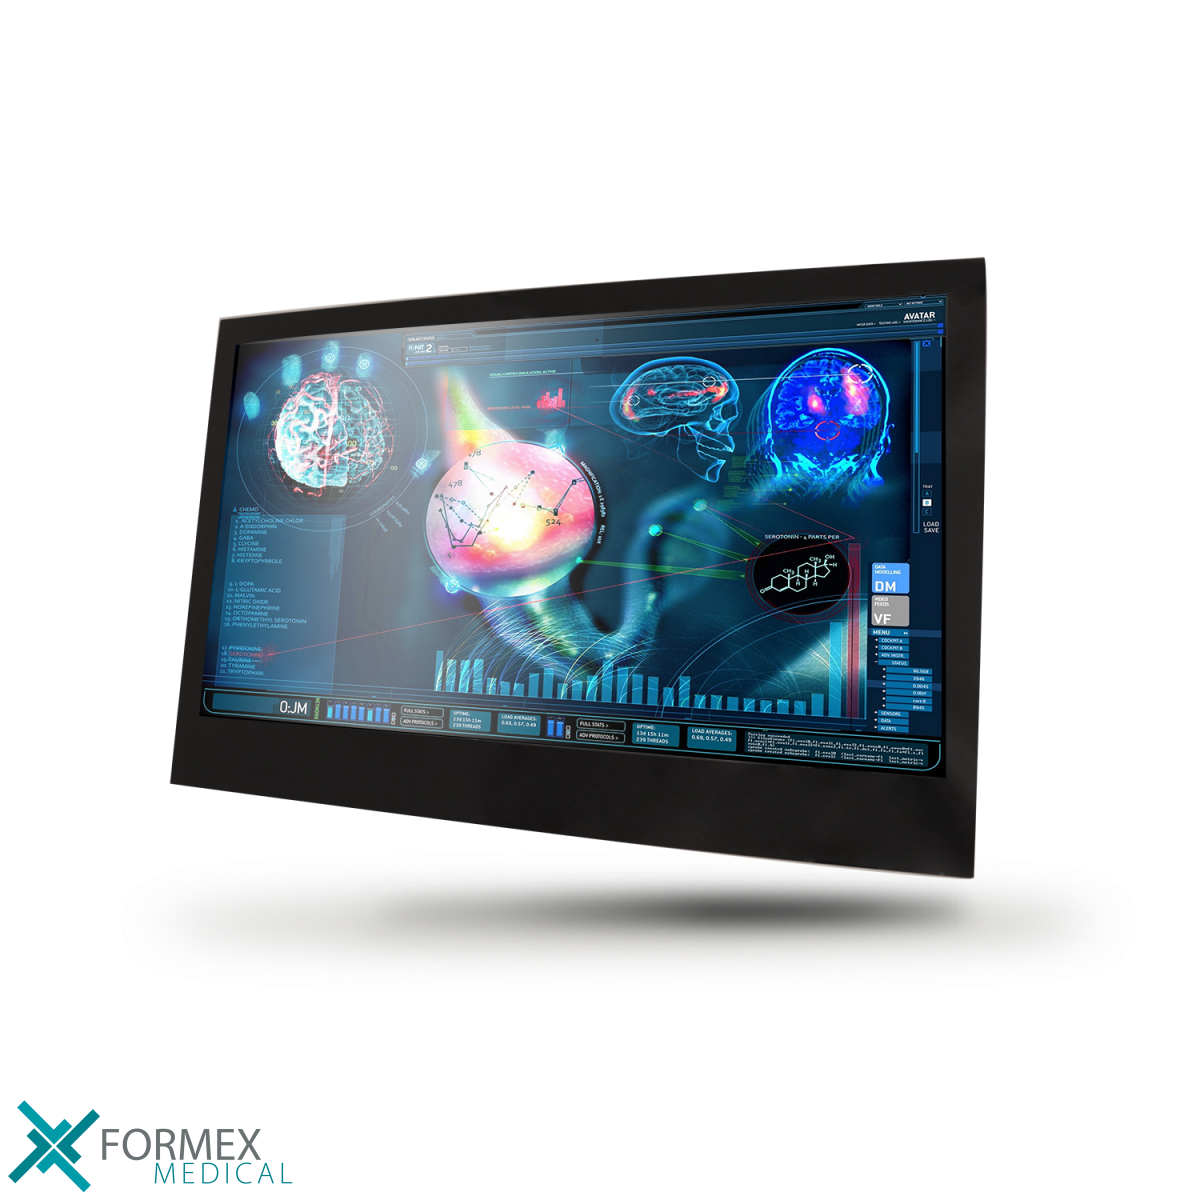 Onyx MEDDP-624 medical displays, Onyx medische schermen, eizo medical monitor, Onyx medische monitoren, eizo medical, Onyx medische beeldschermen, diagnostische monitoren, diagnostiek monitoren, eizo monitor